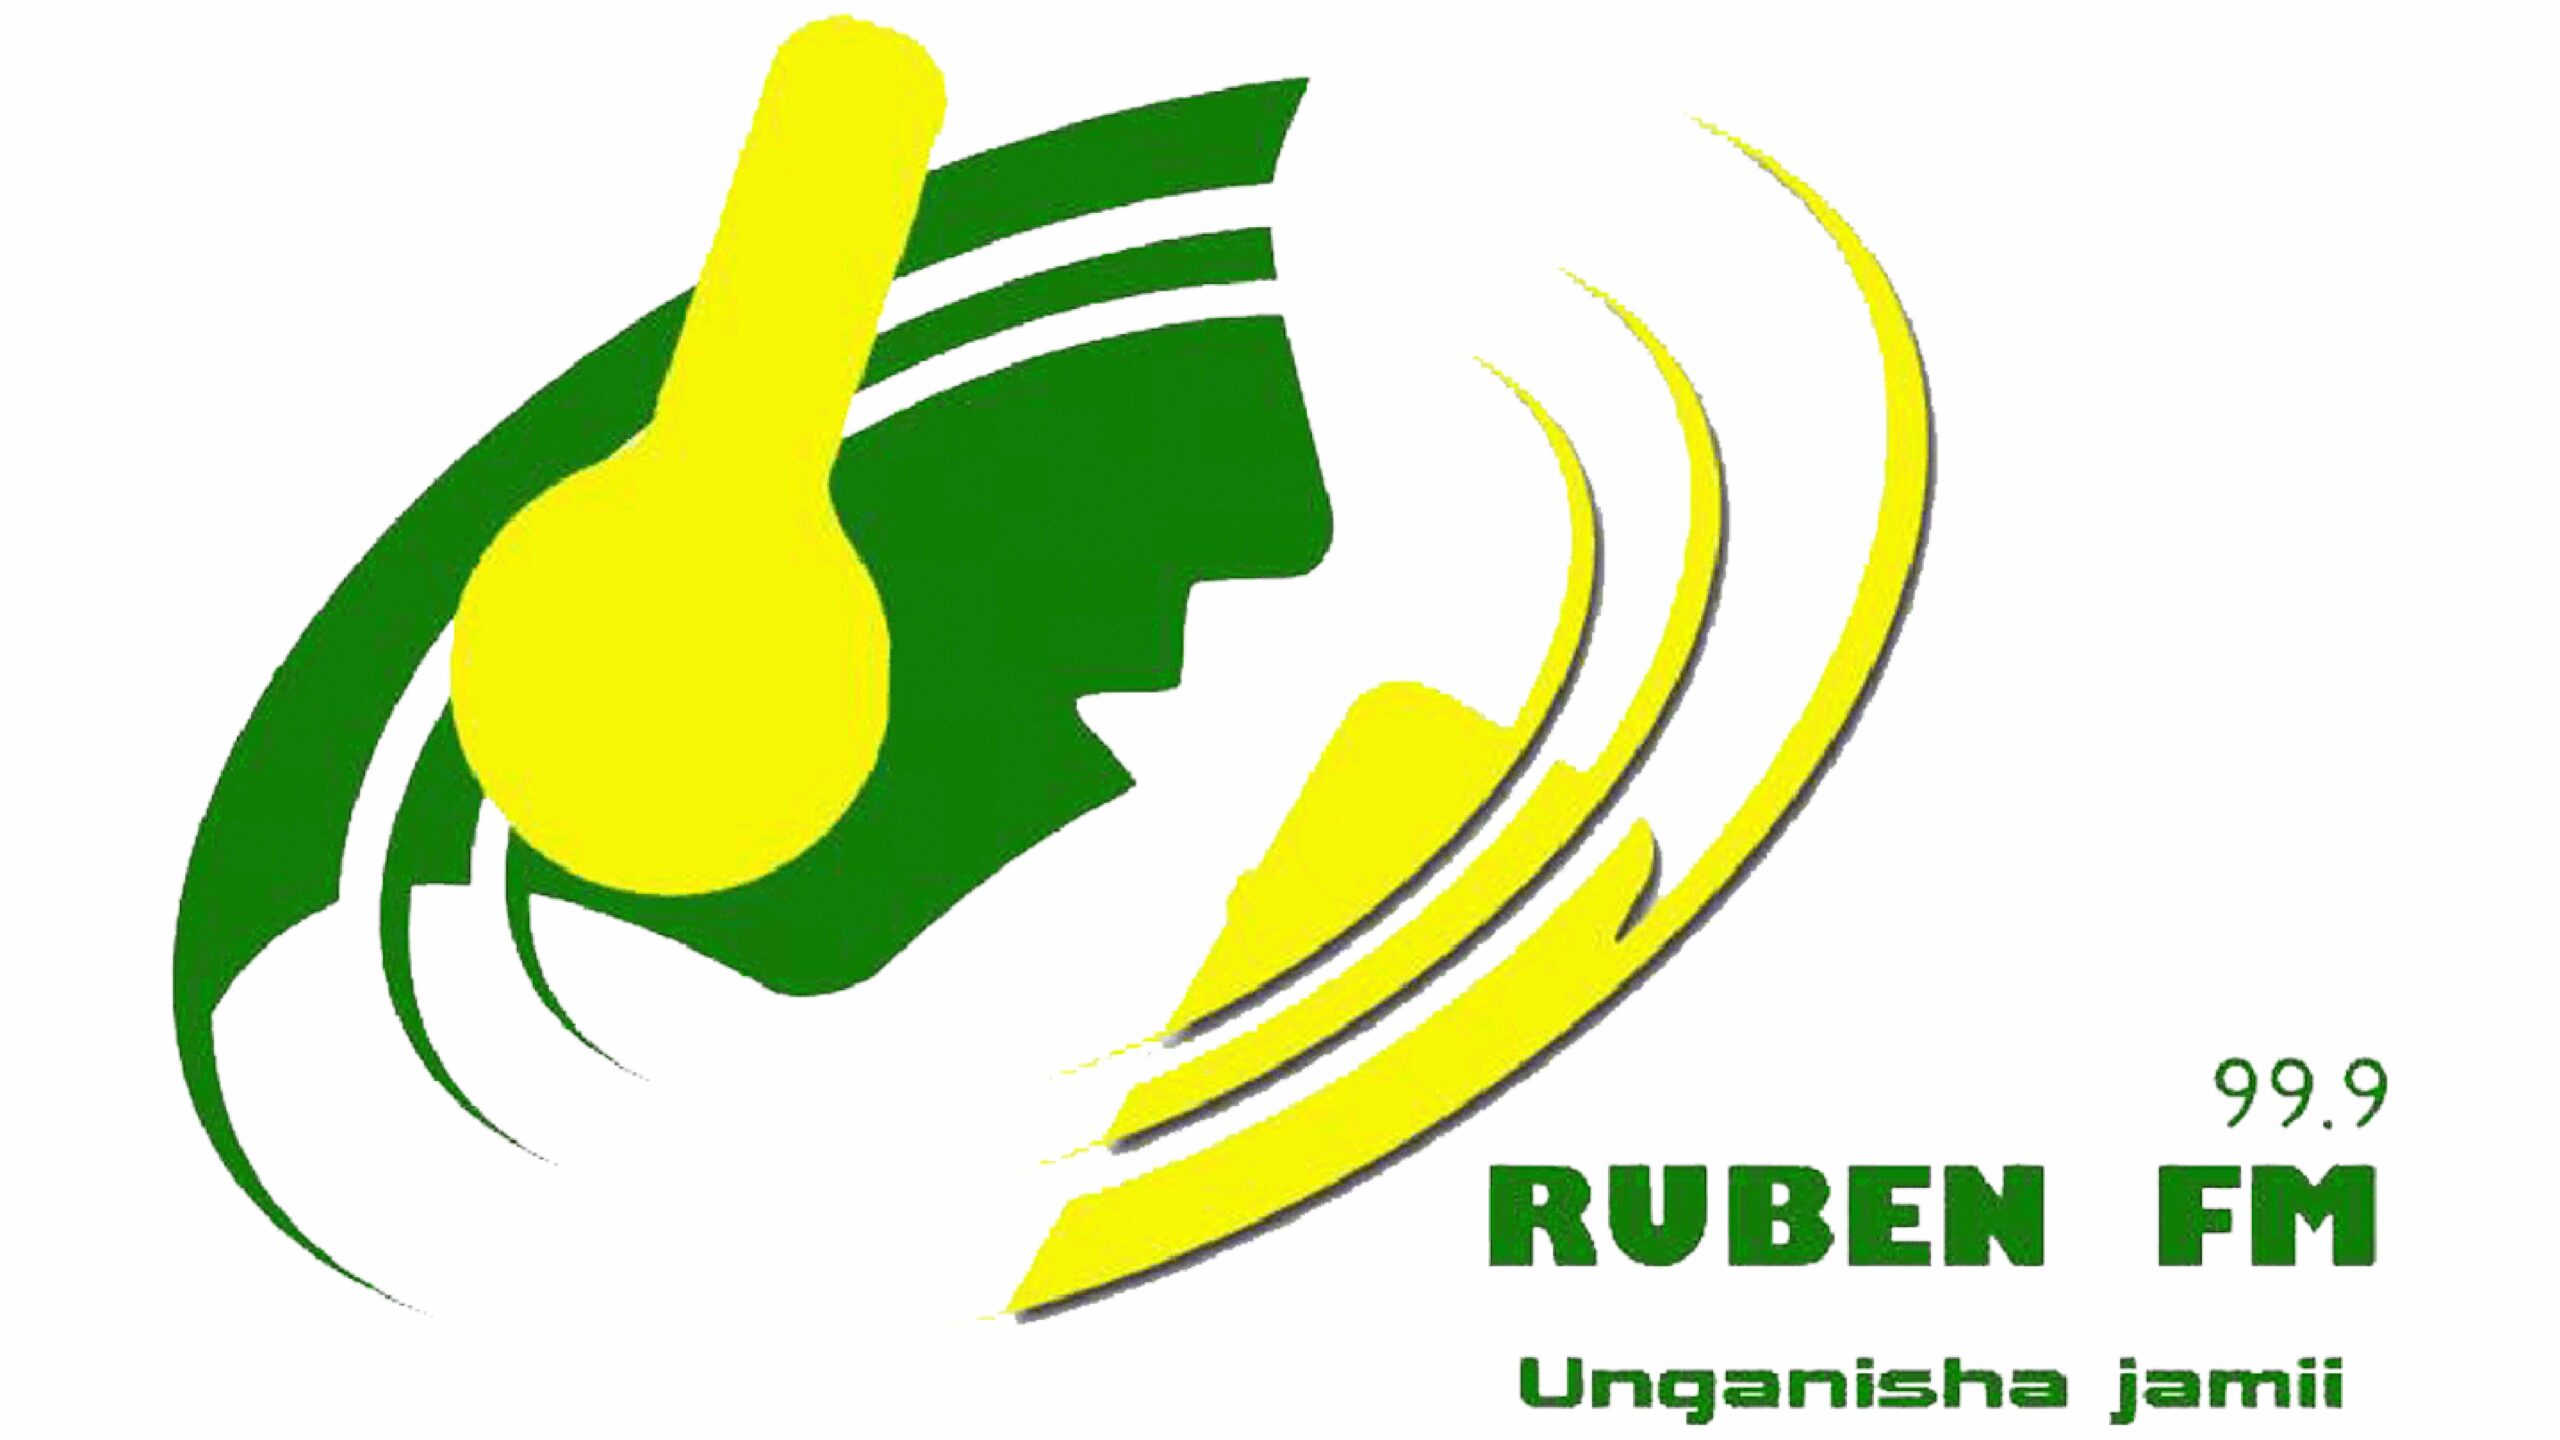 ruben fm logo3636 scaled